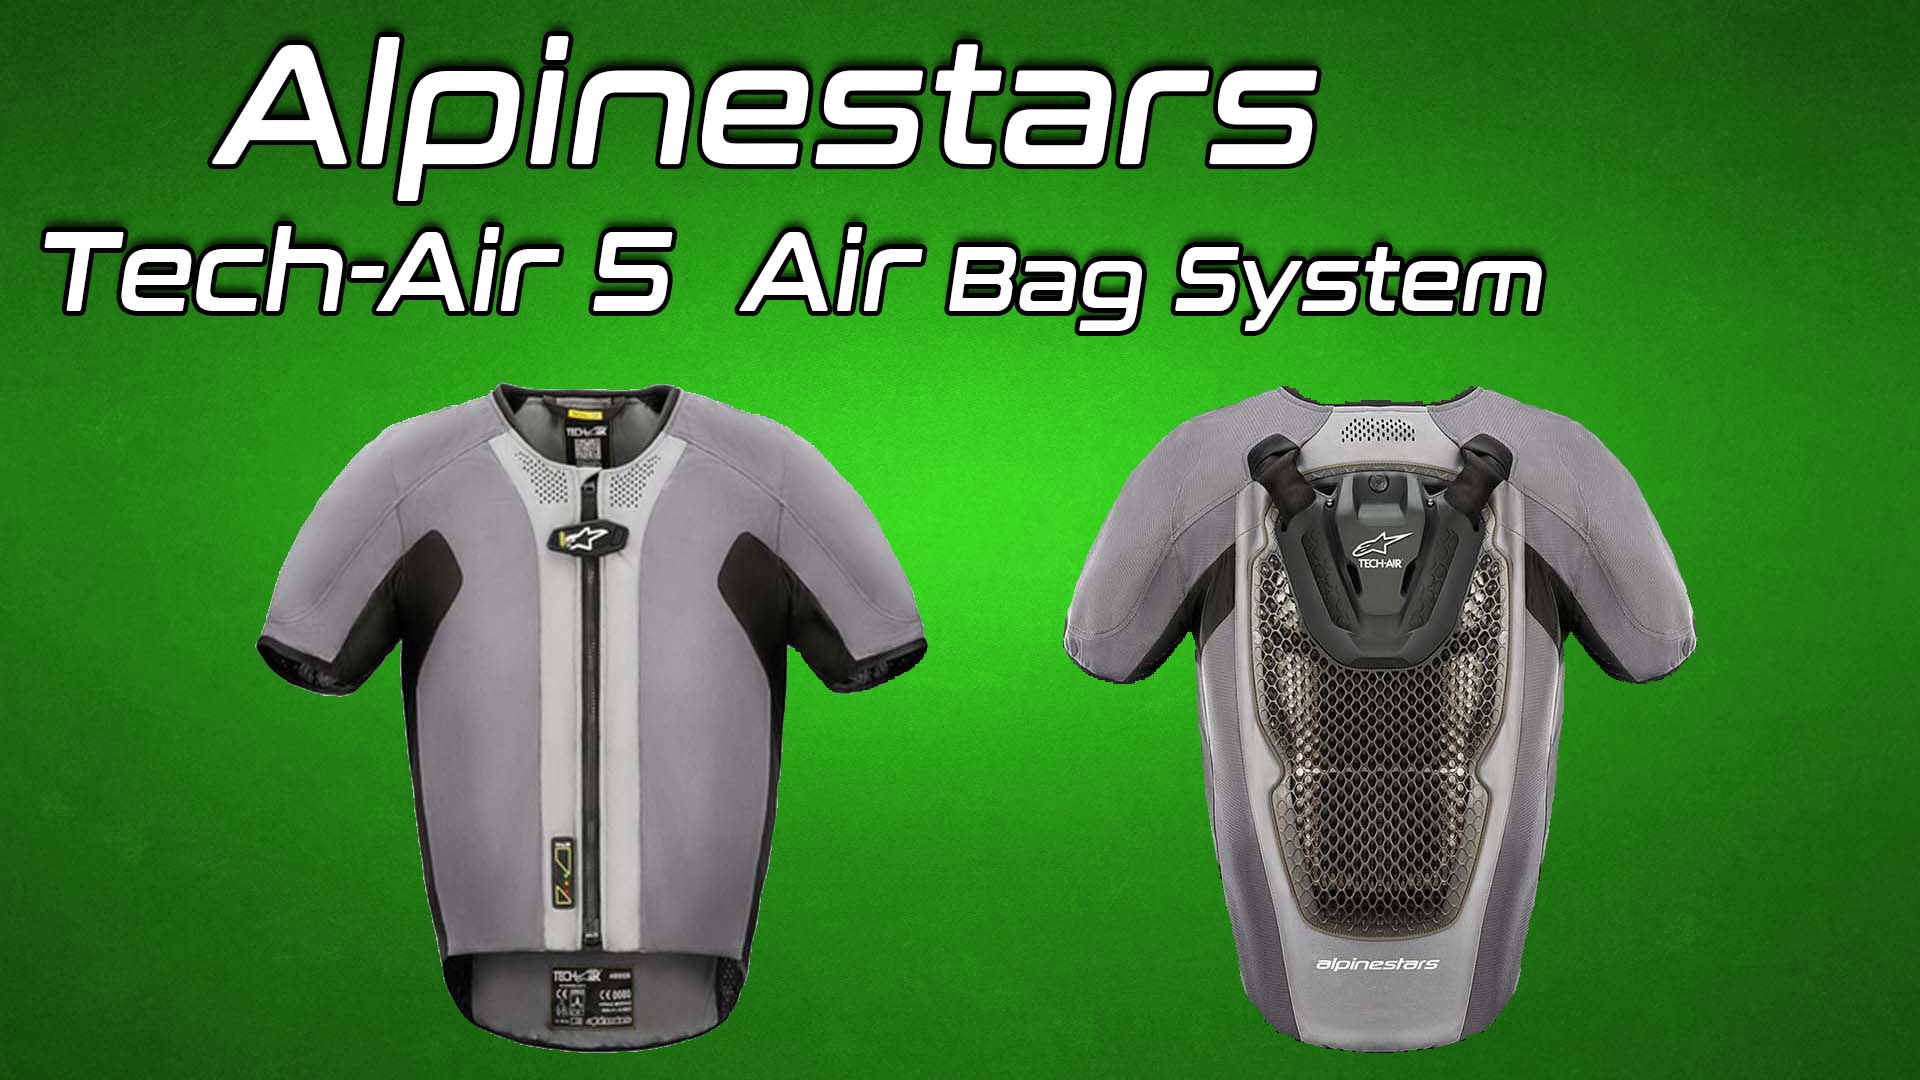 Alpinestars Tech-Air 5 Airbag System